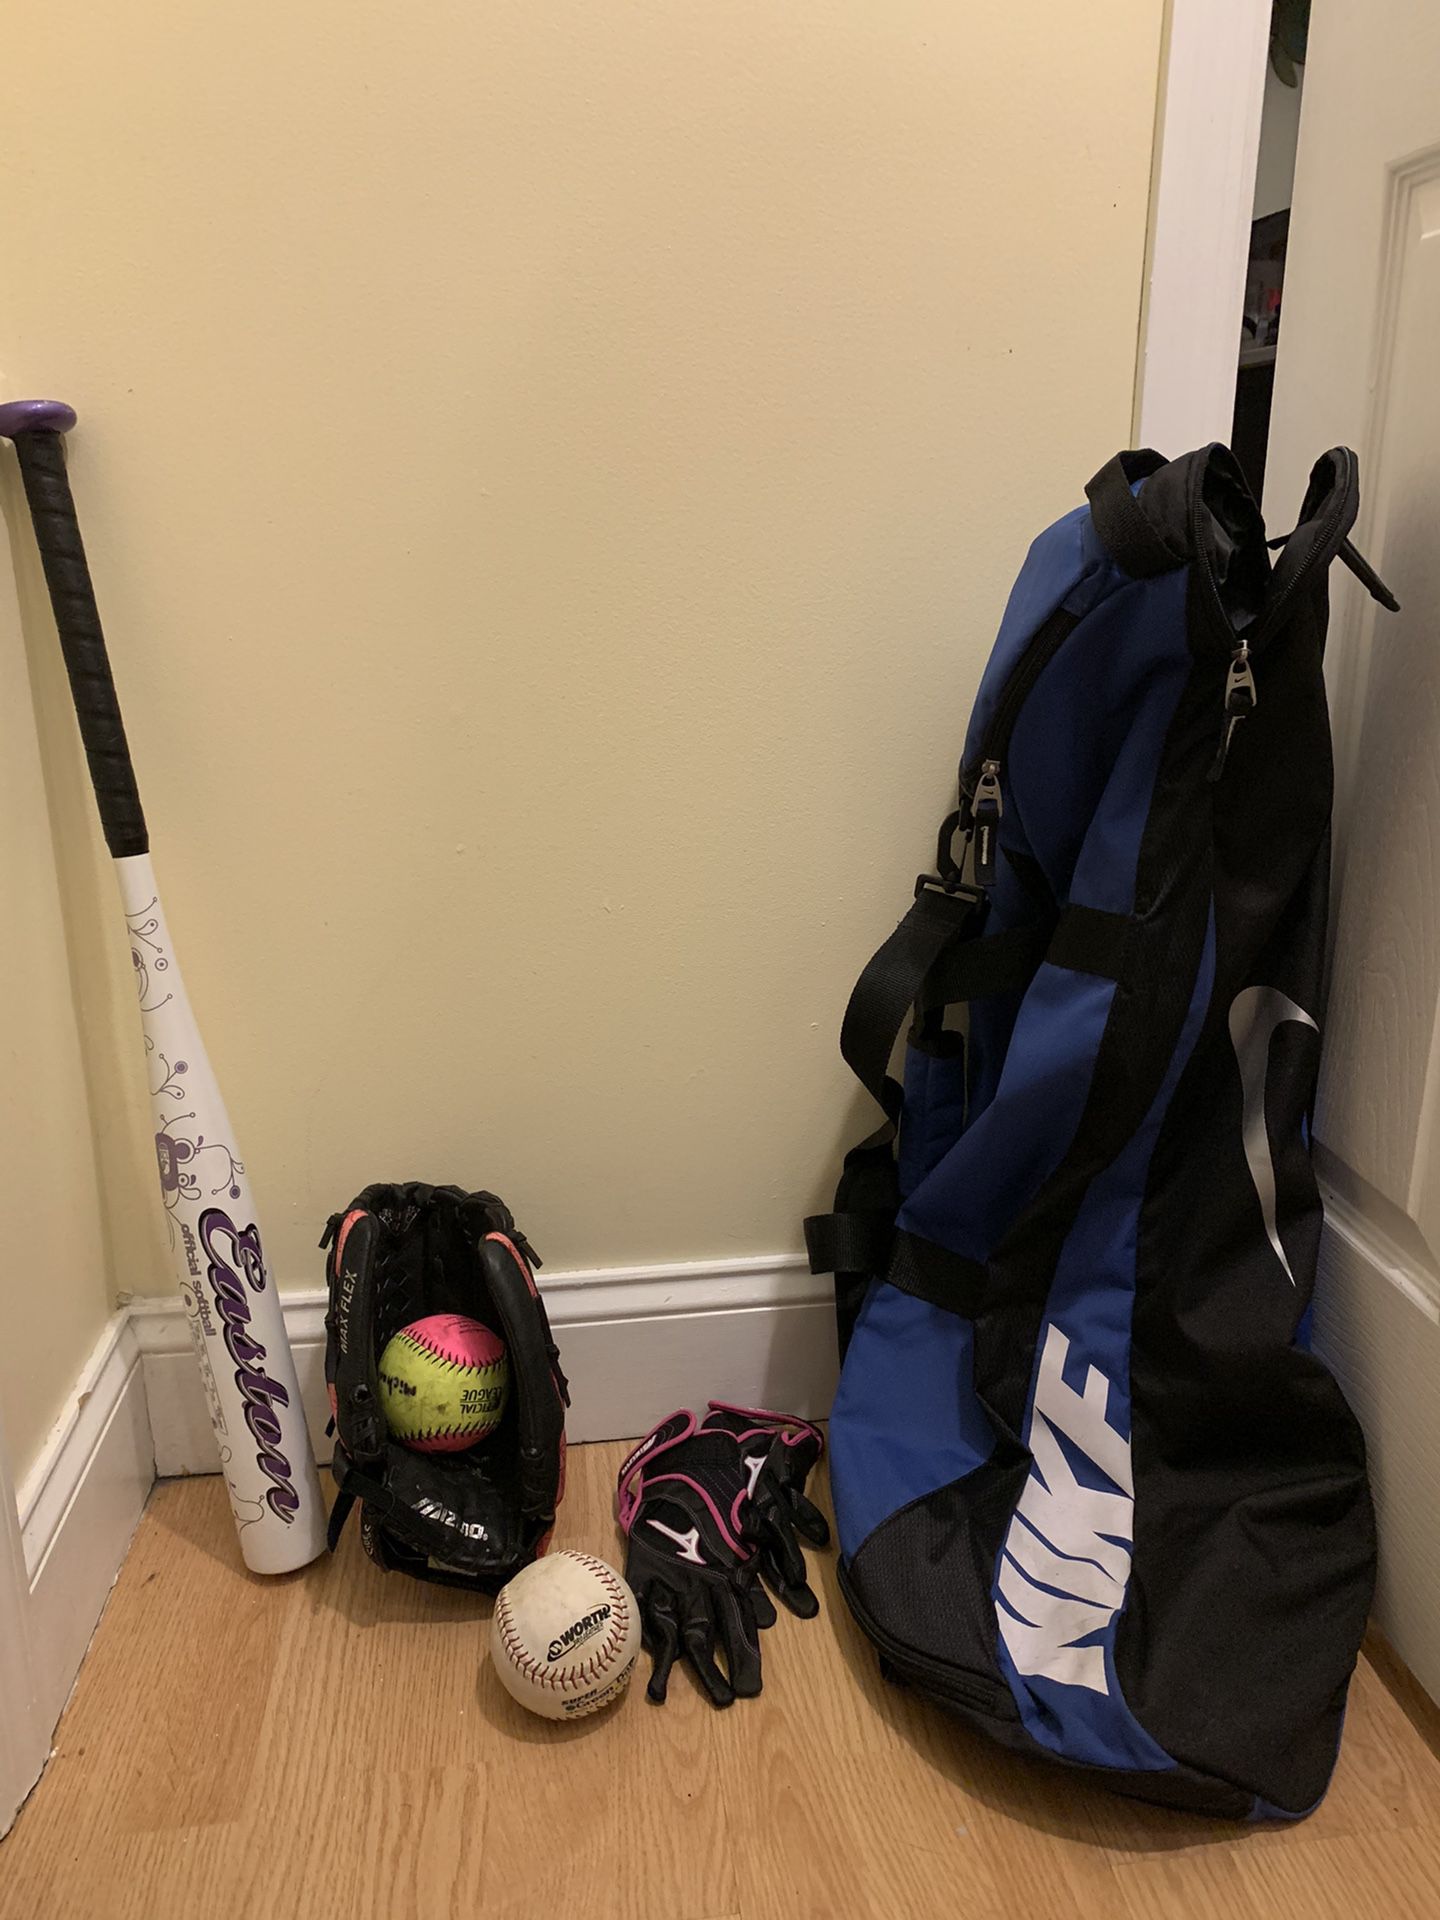 Fast pitch Softball bat, gloves, Nike bag, & more